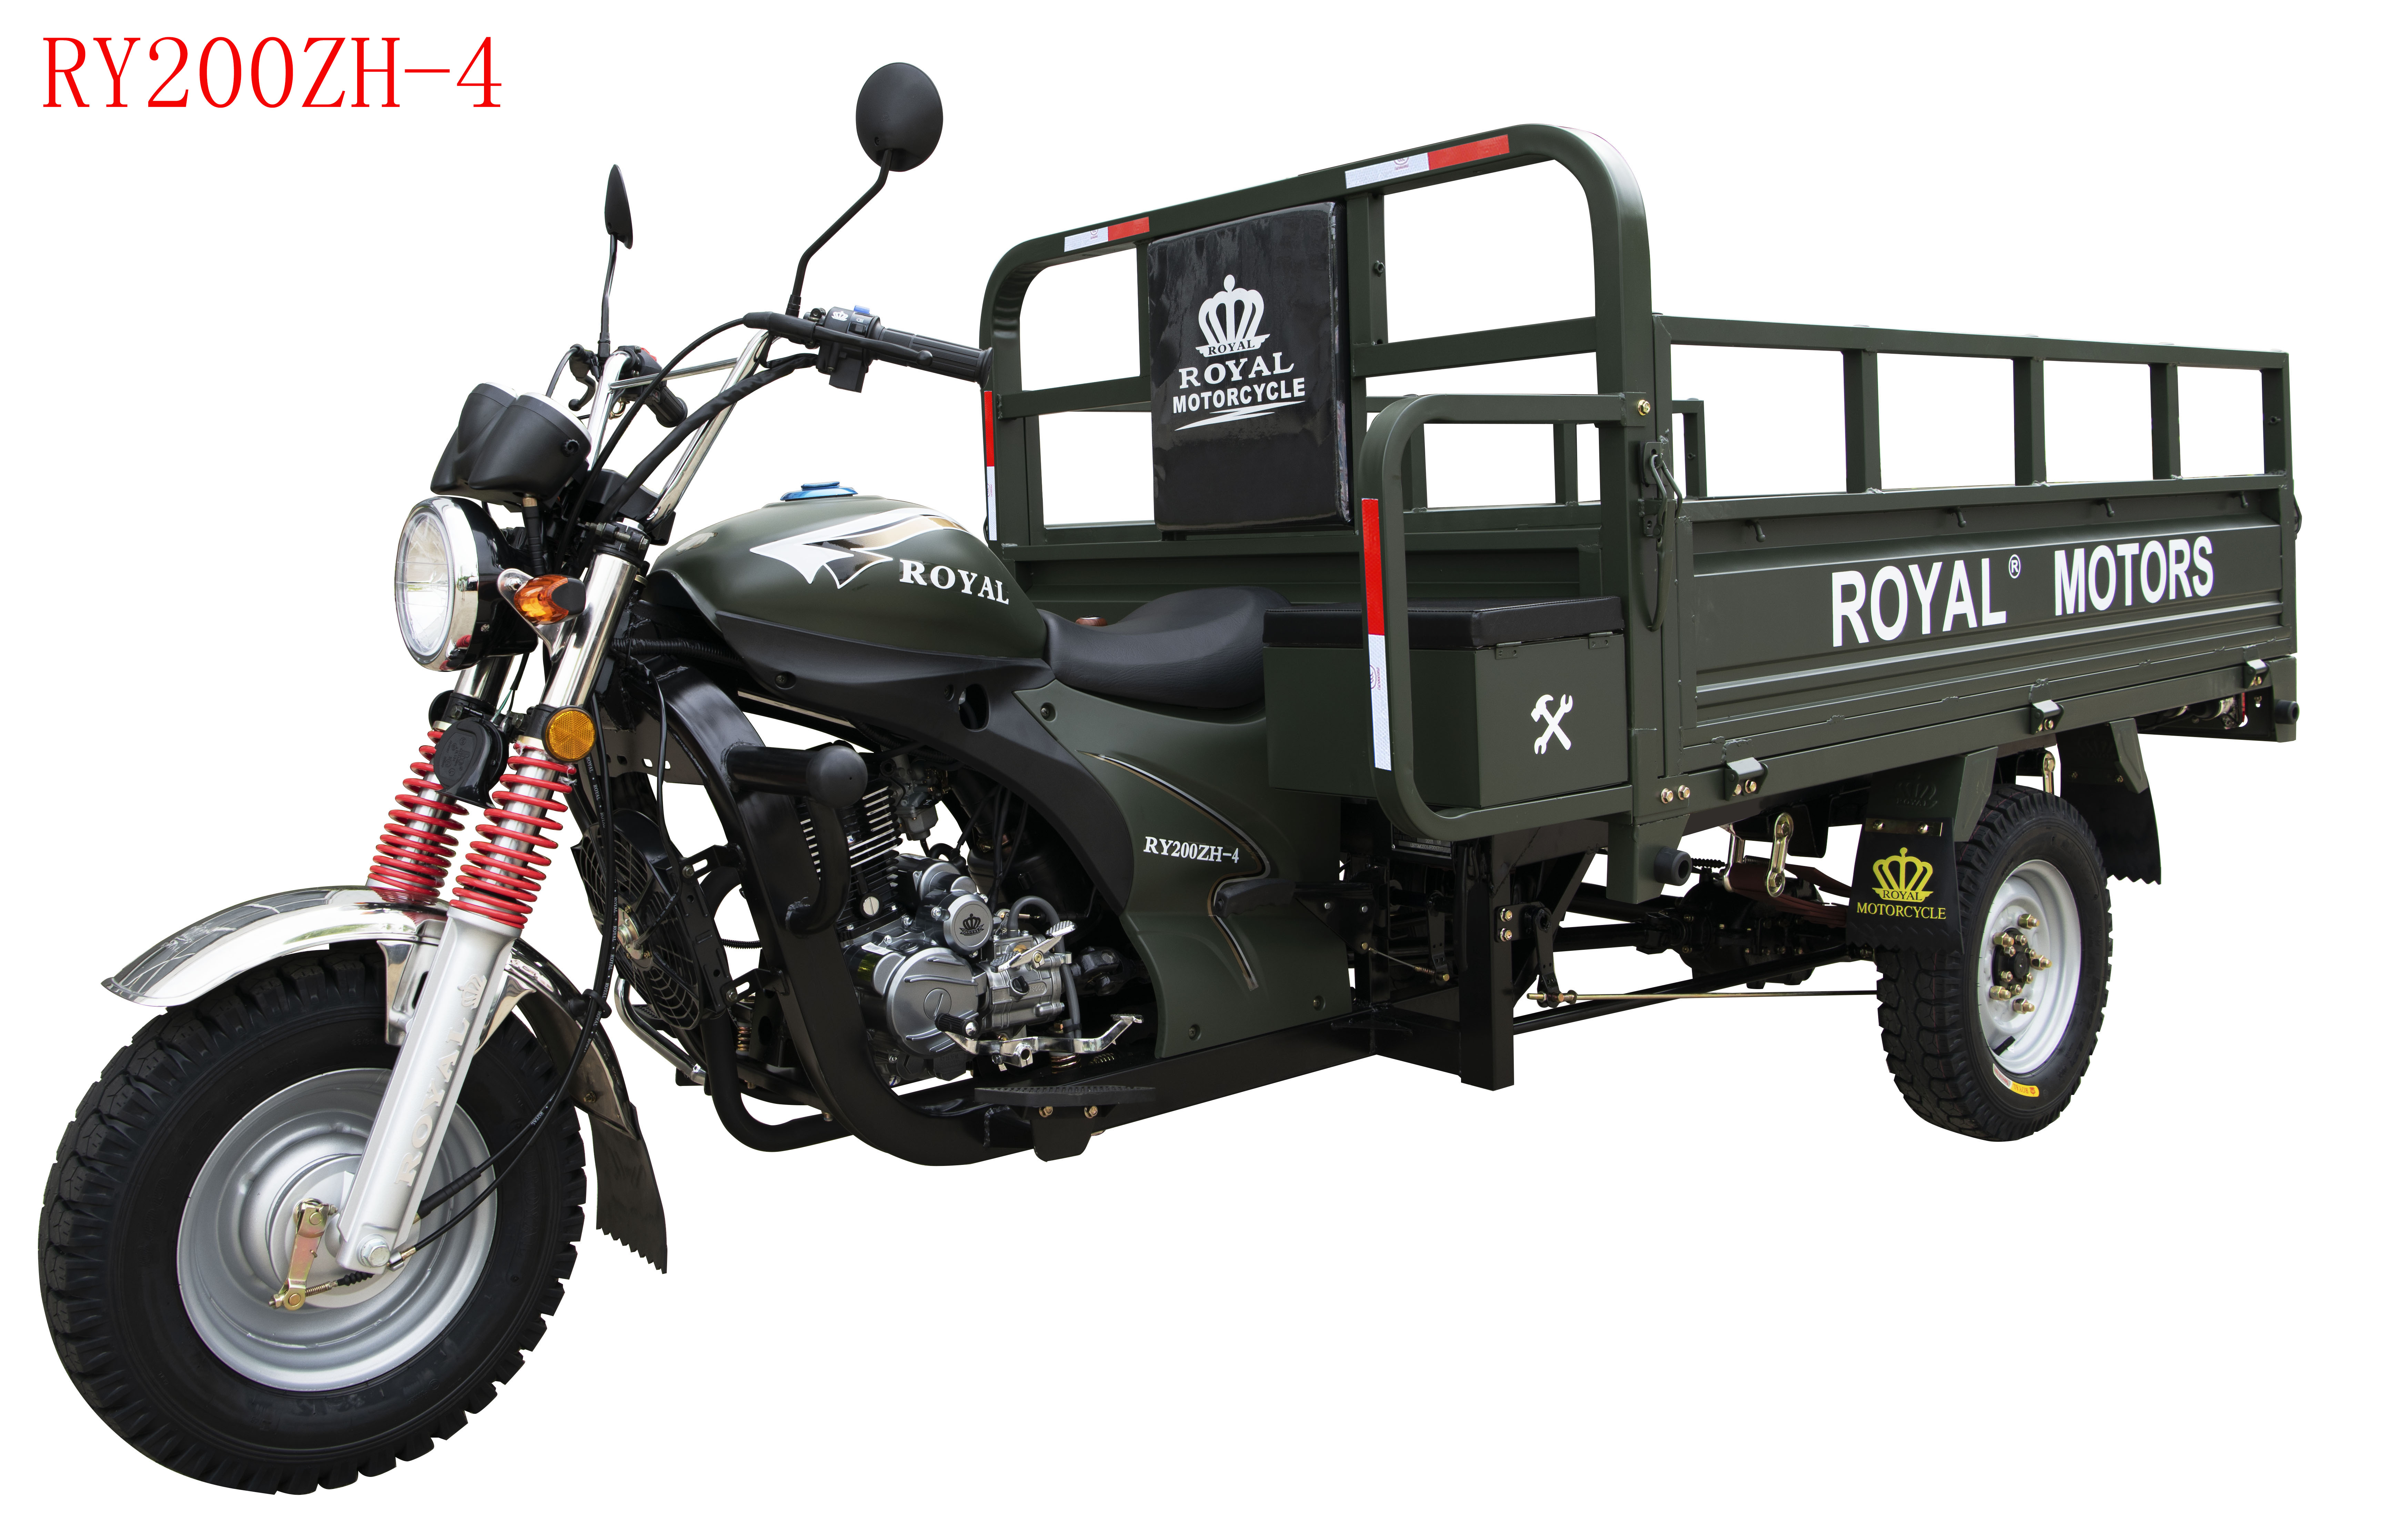 Royal Motor Aboboyaa-RY200ZH-4AW